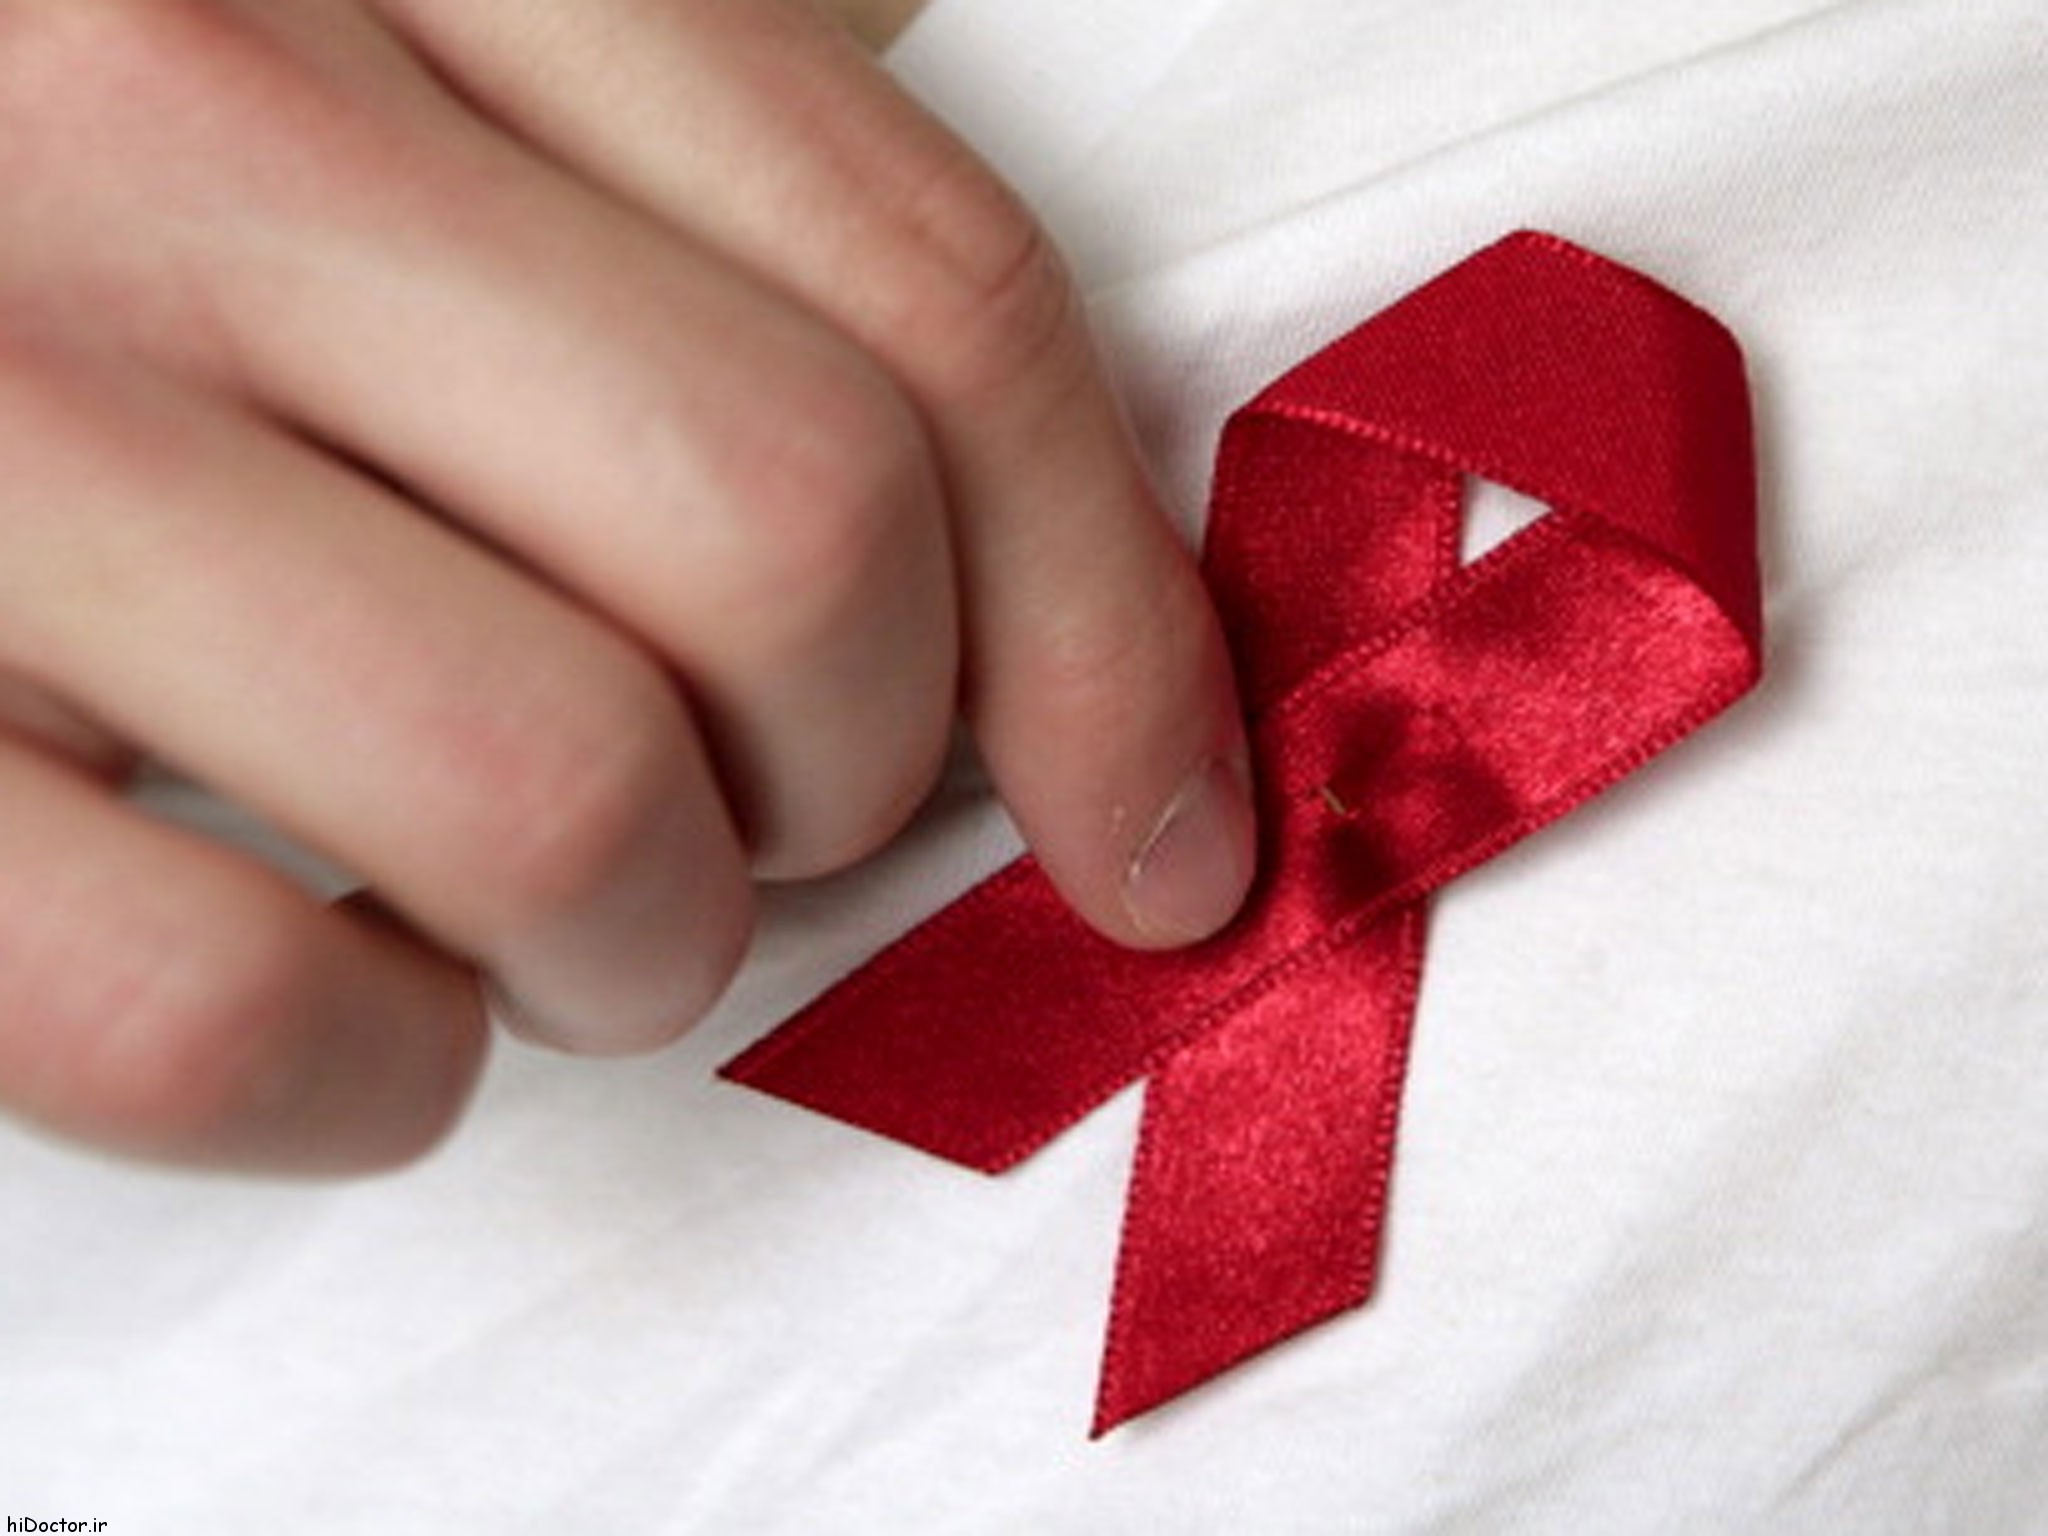 AIDS-HIV-photos (36)